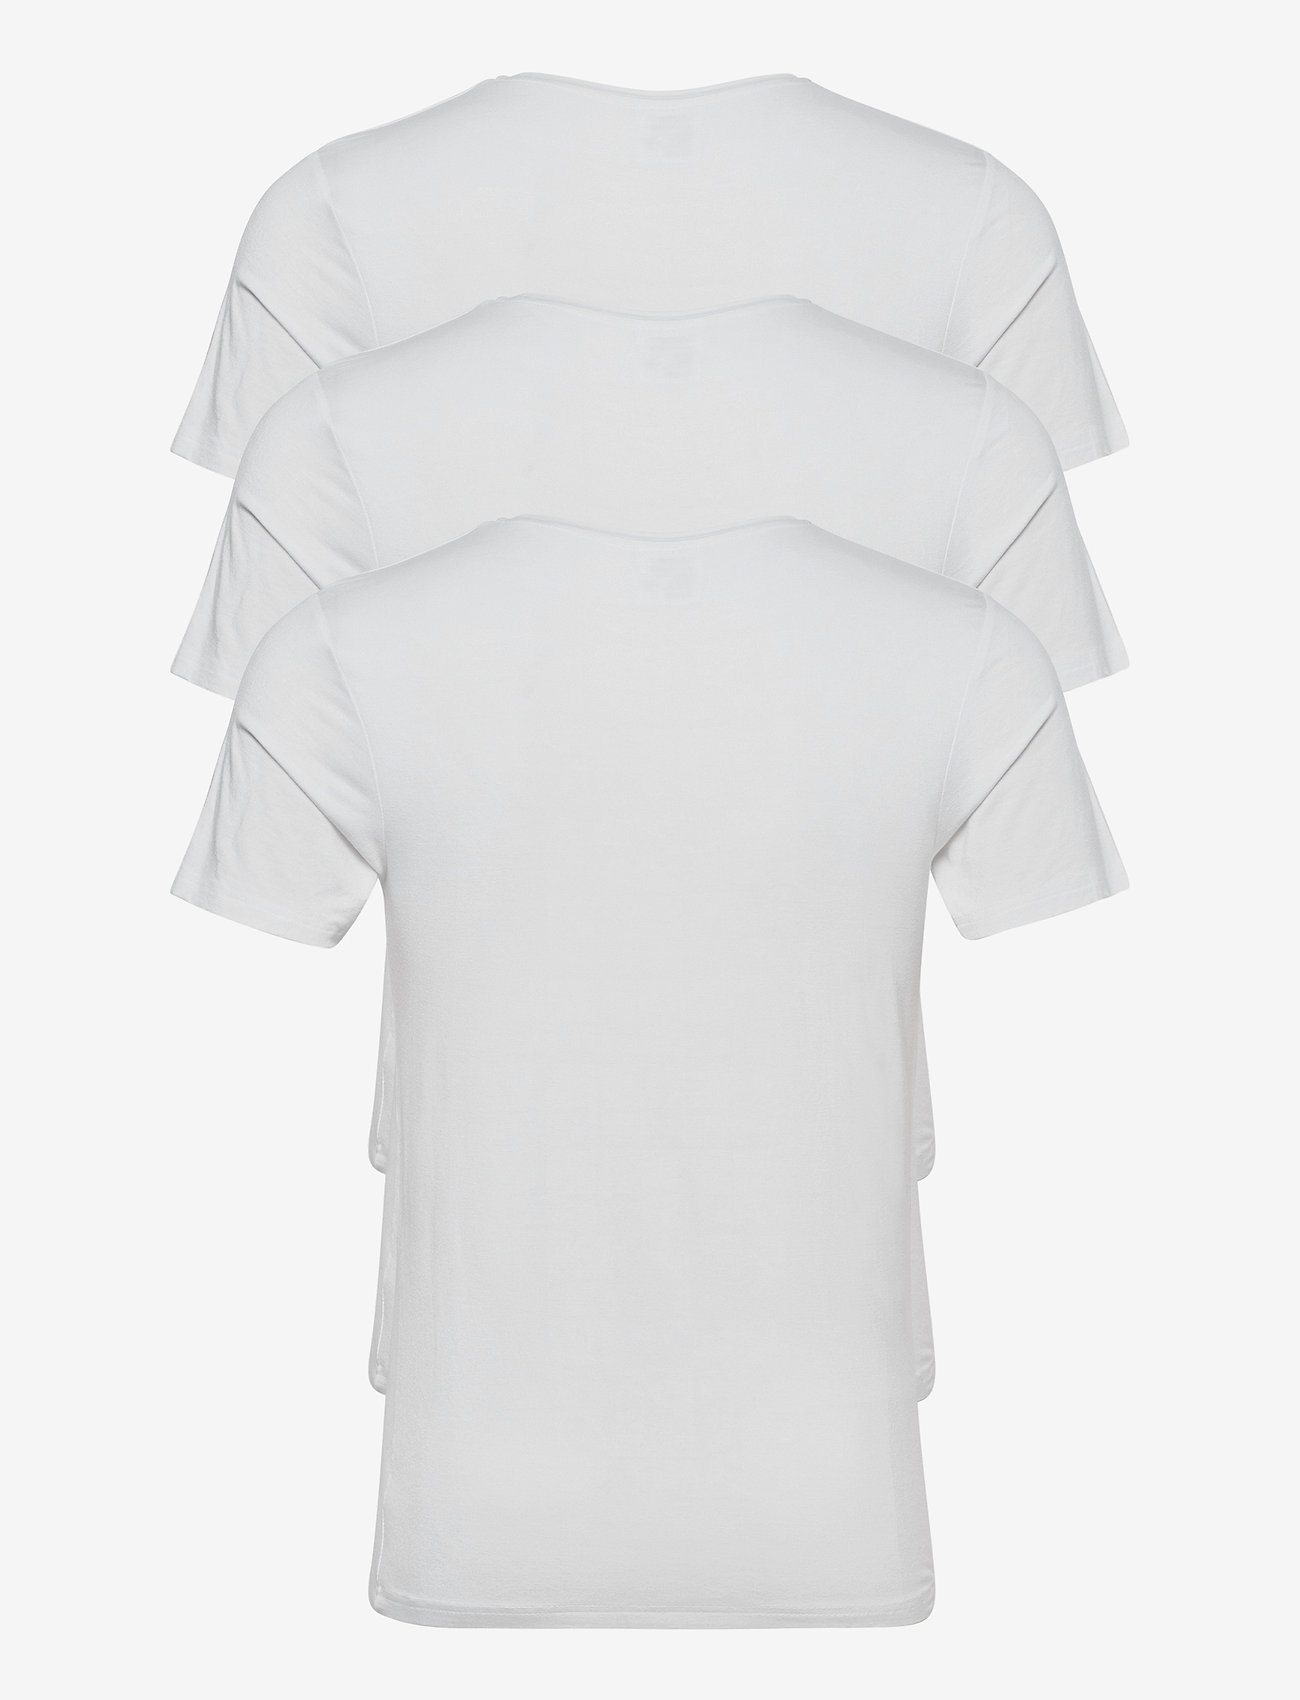 Clean Cut Copenhagen - 3-Pack Tee - Bamboo - laisvalaikio marškinėliai - white - 1